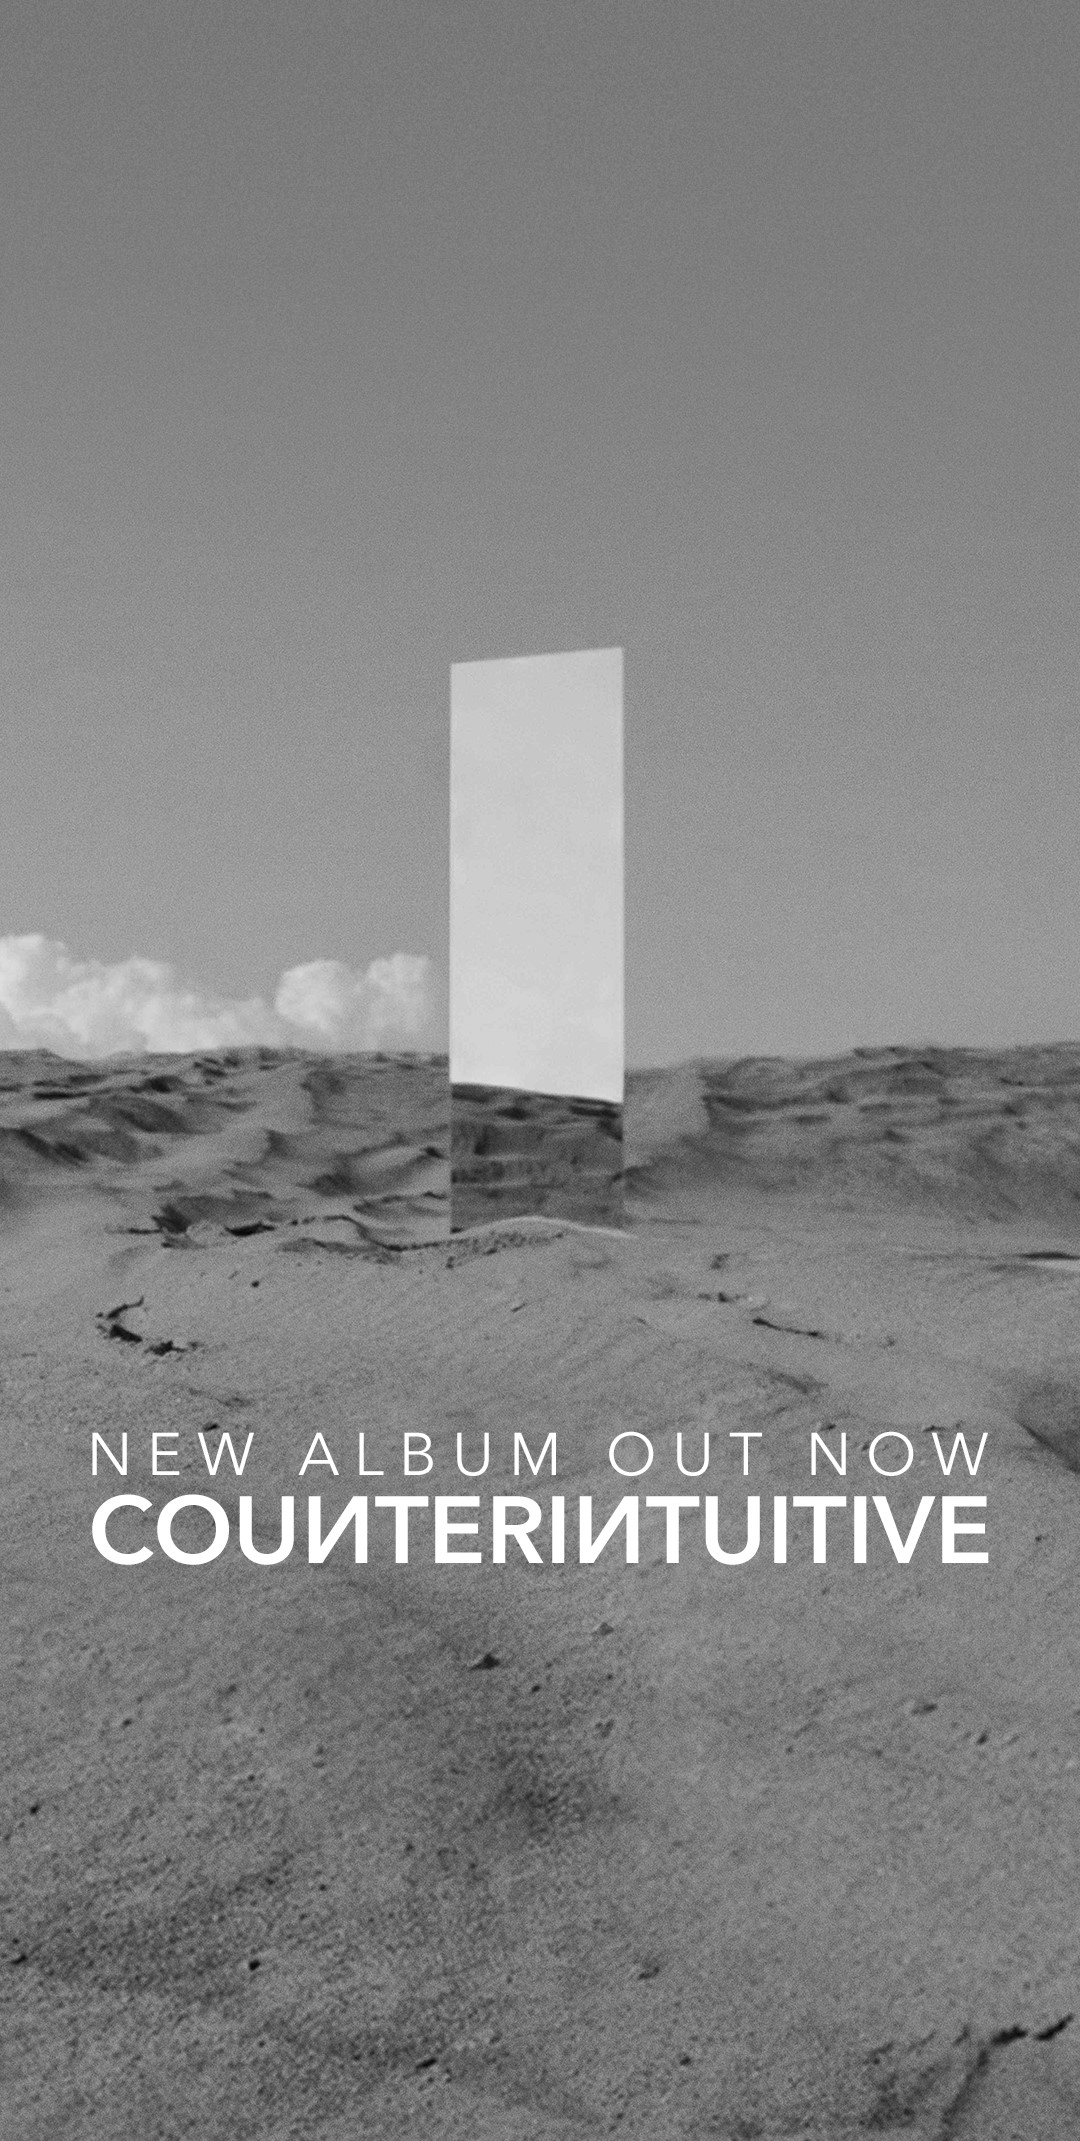 IONS - counterintuitive album